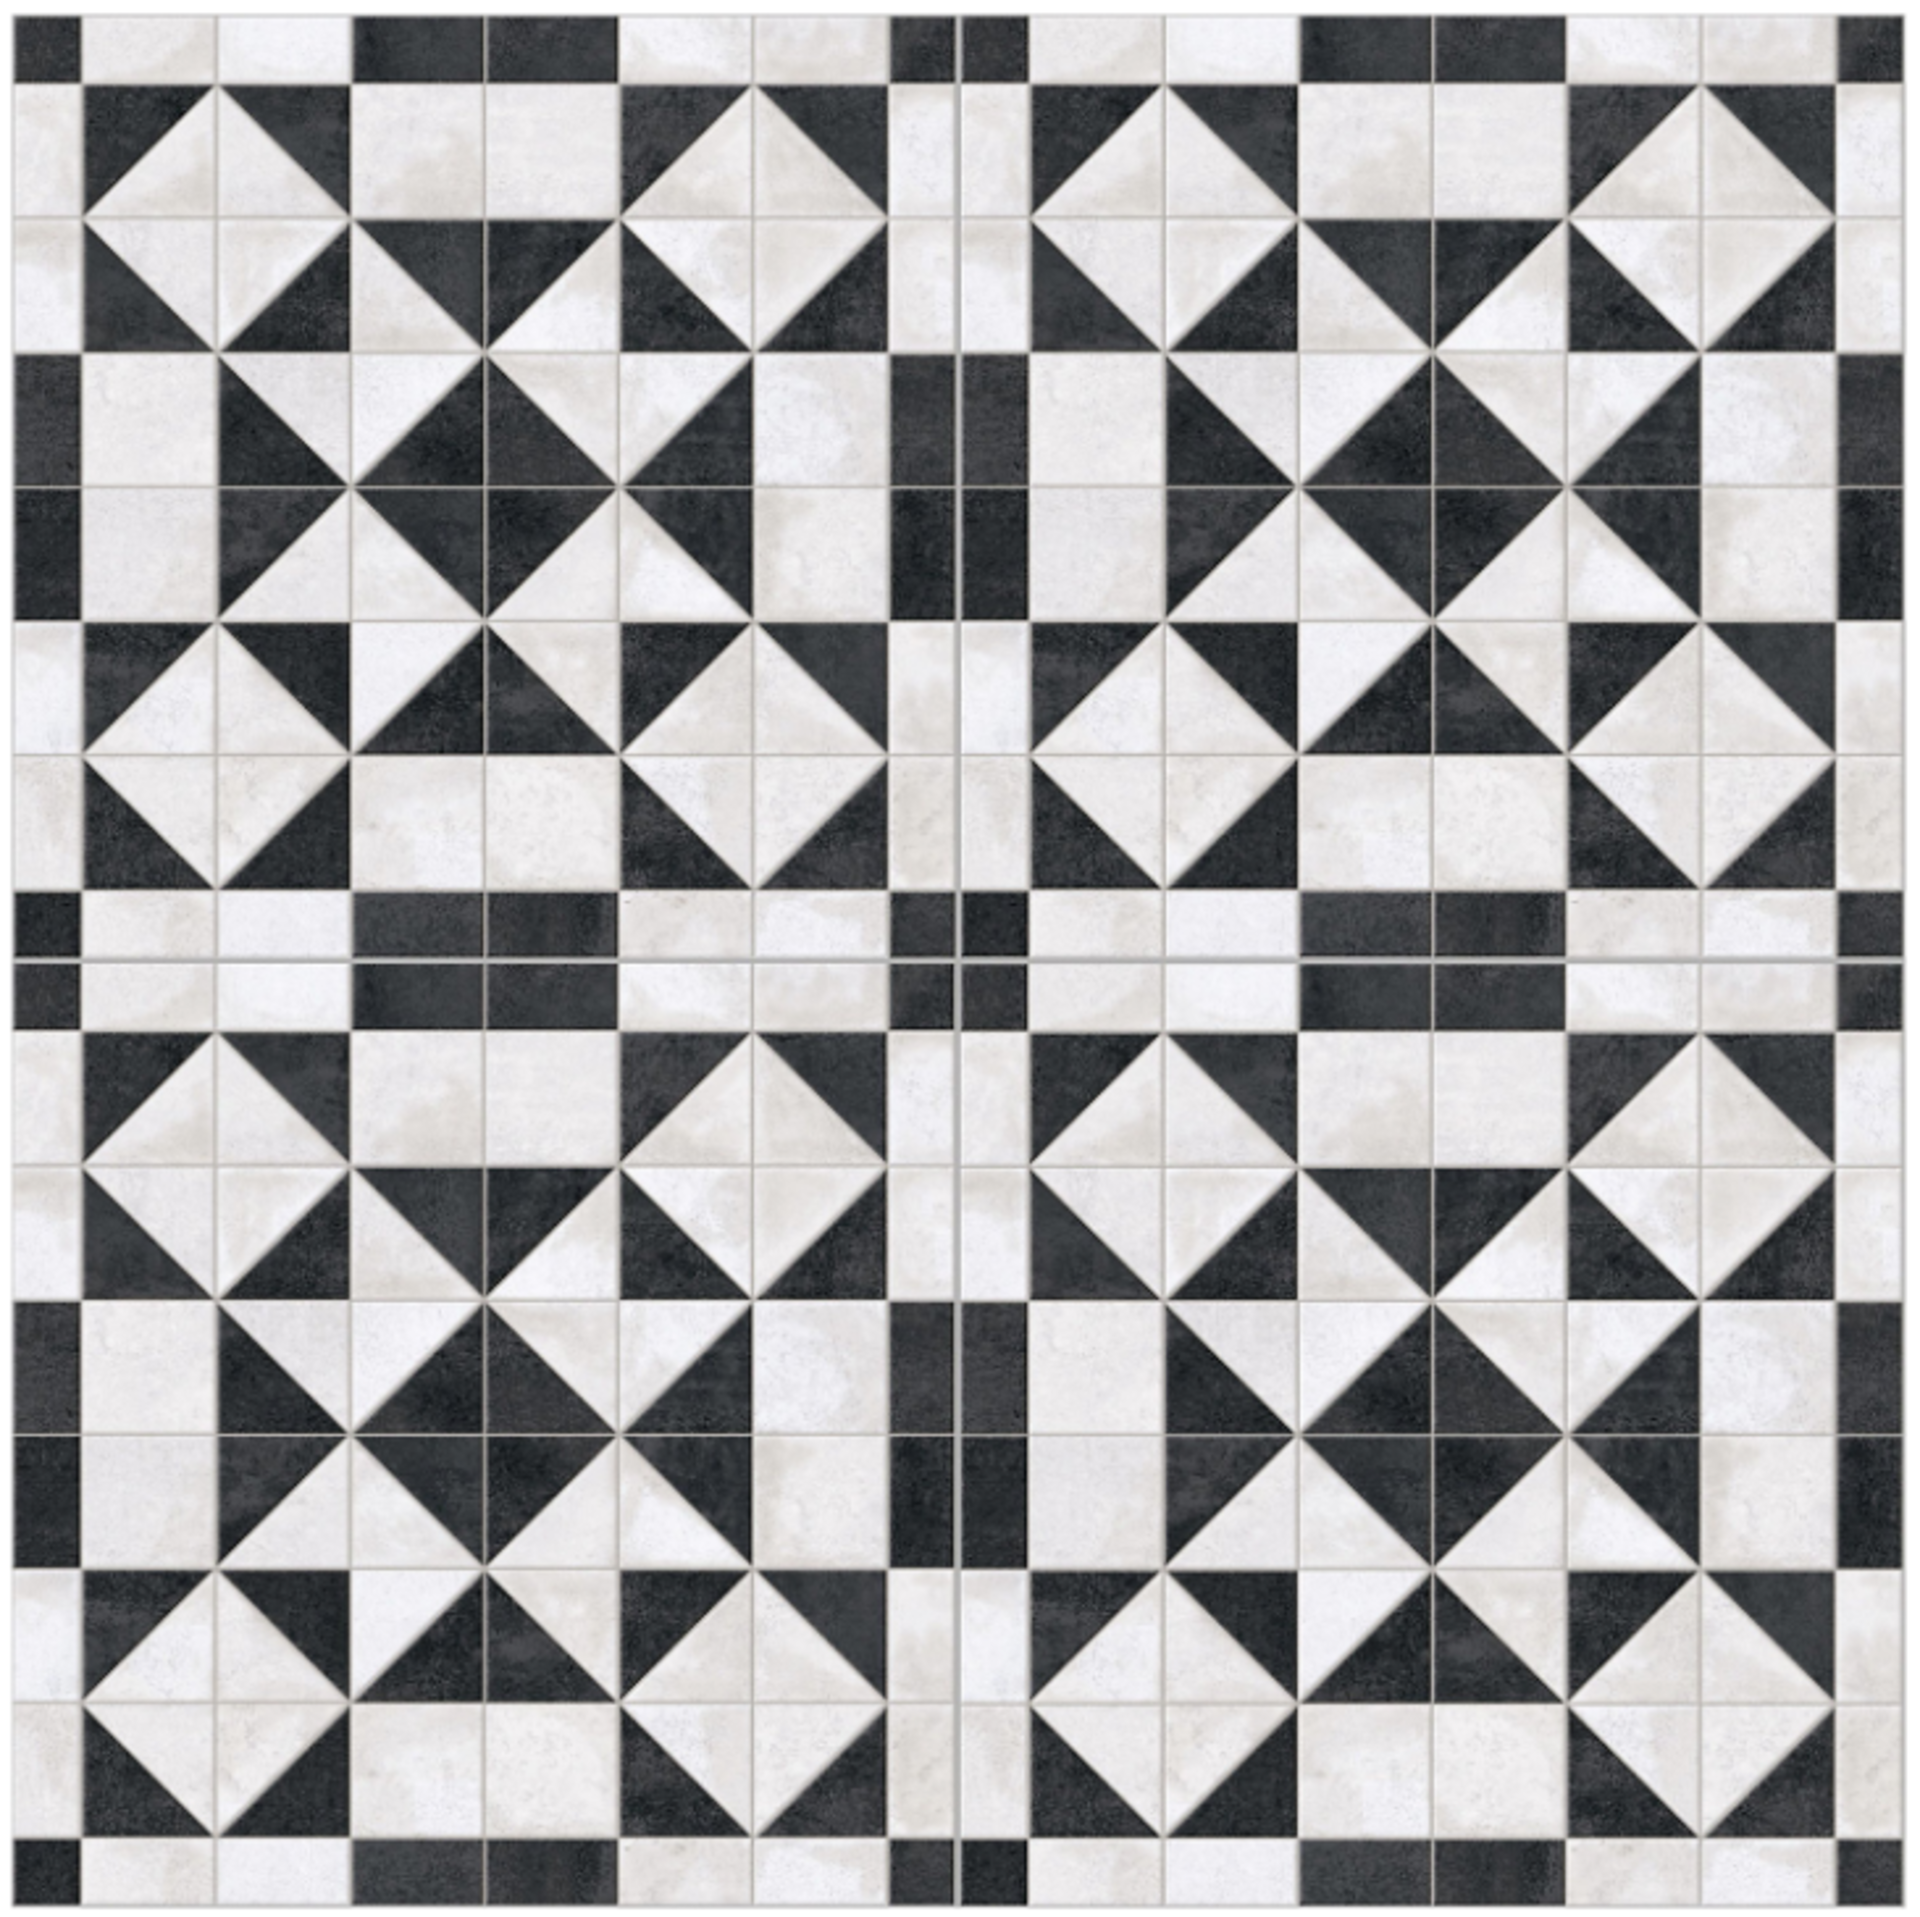 Monochrome Statement Matt Wall & Floor Tiles - Image 2 of 6